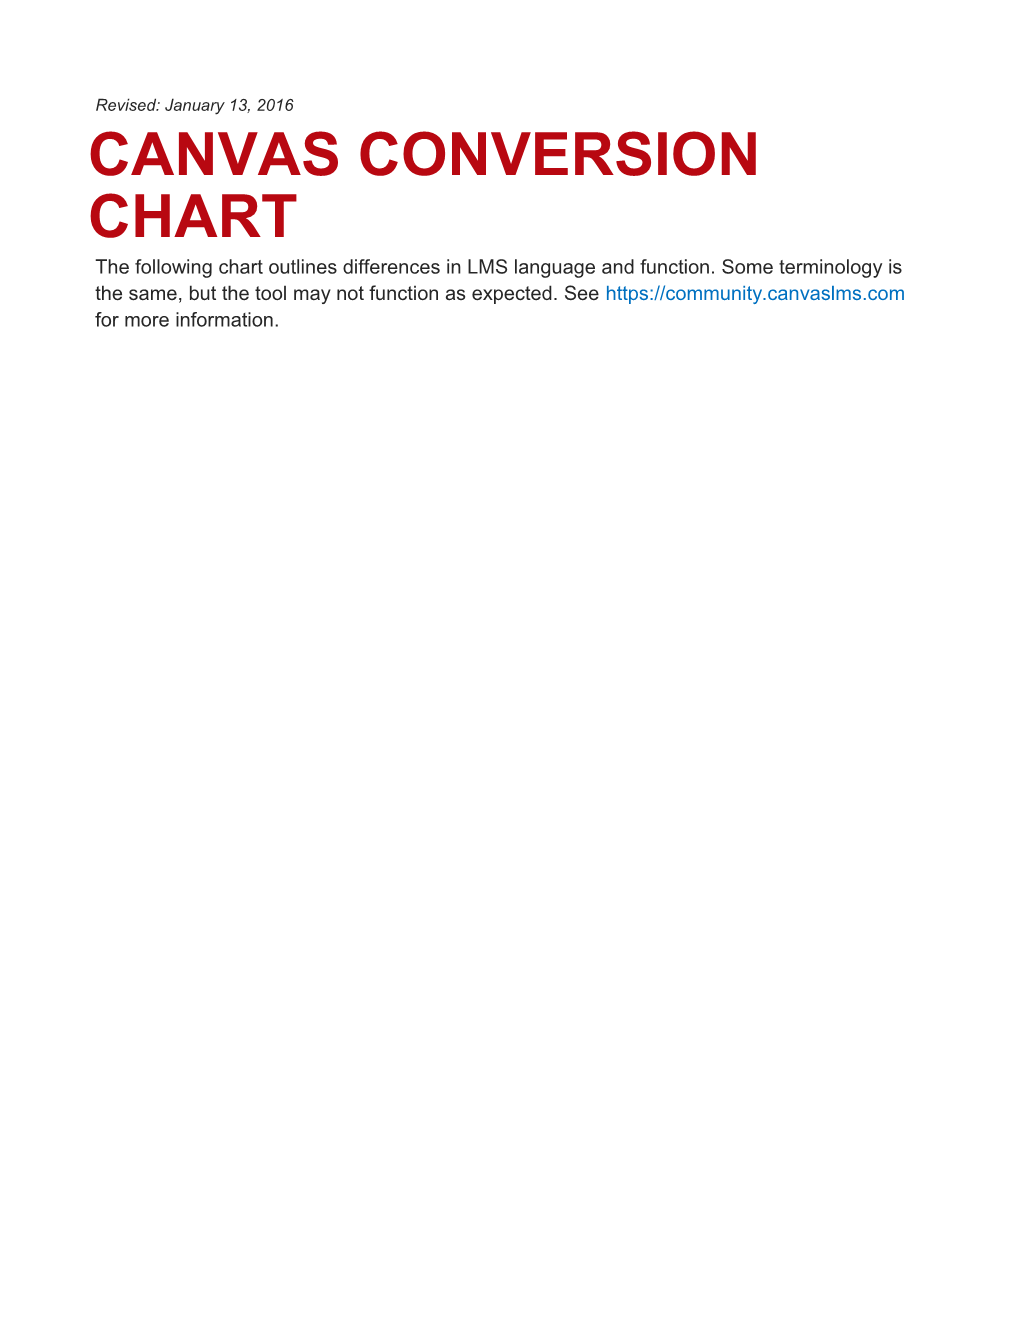 Canvas Conversion Chart